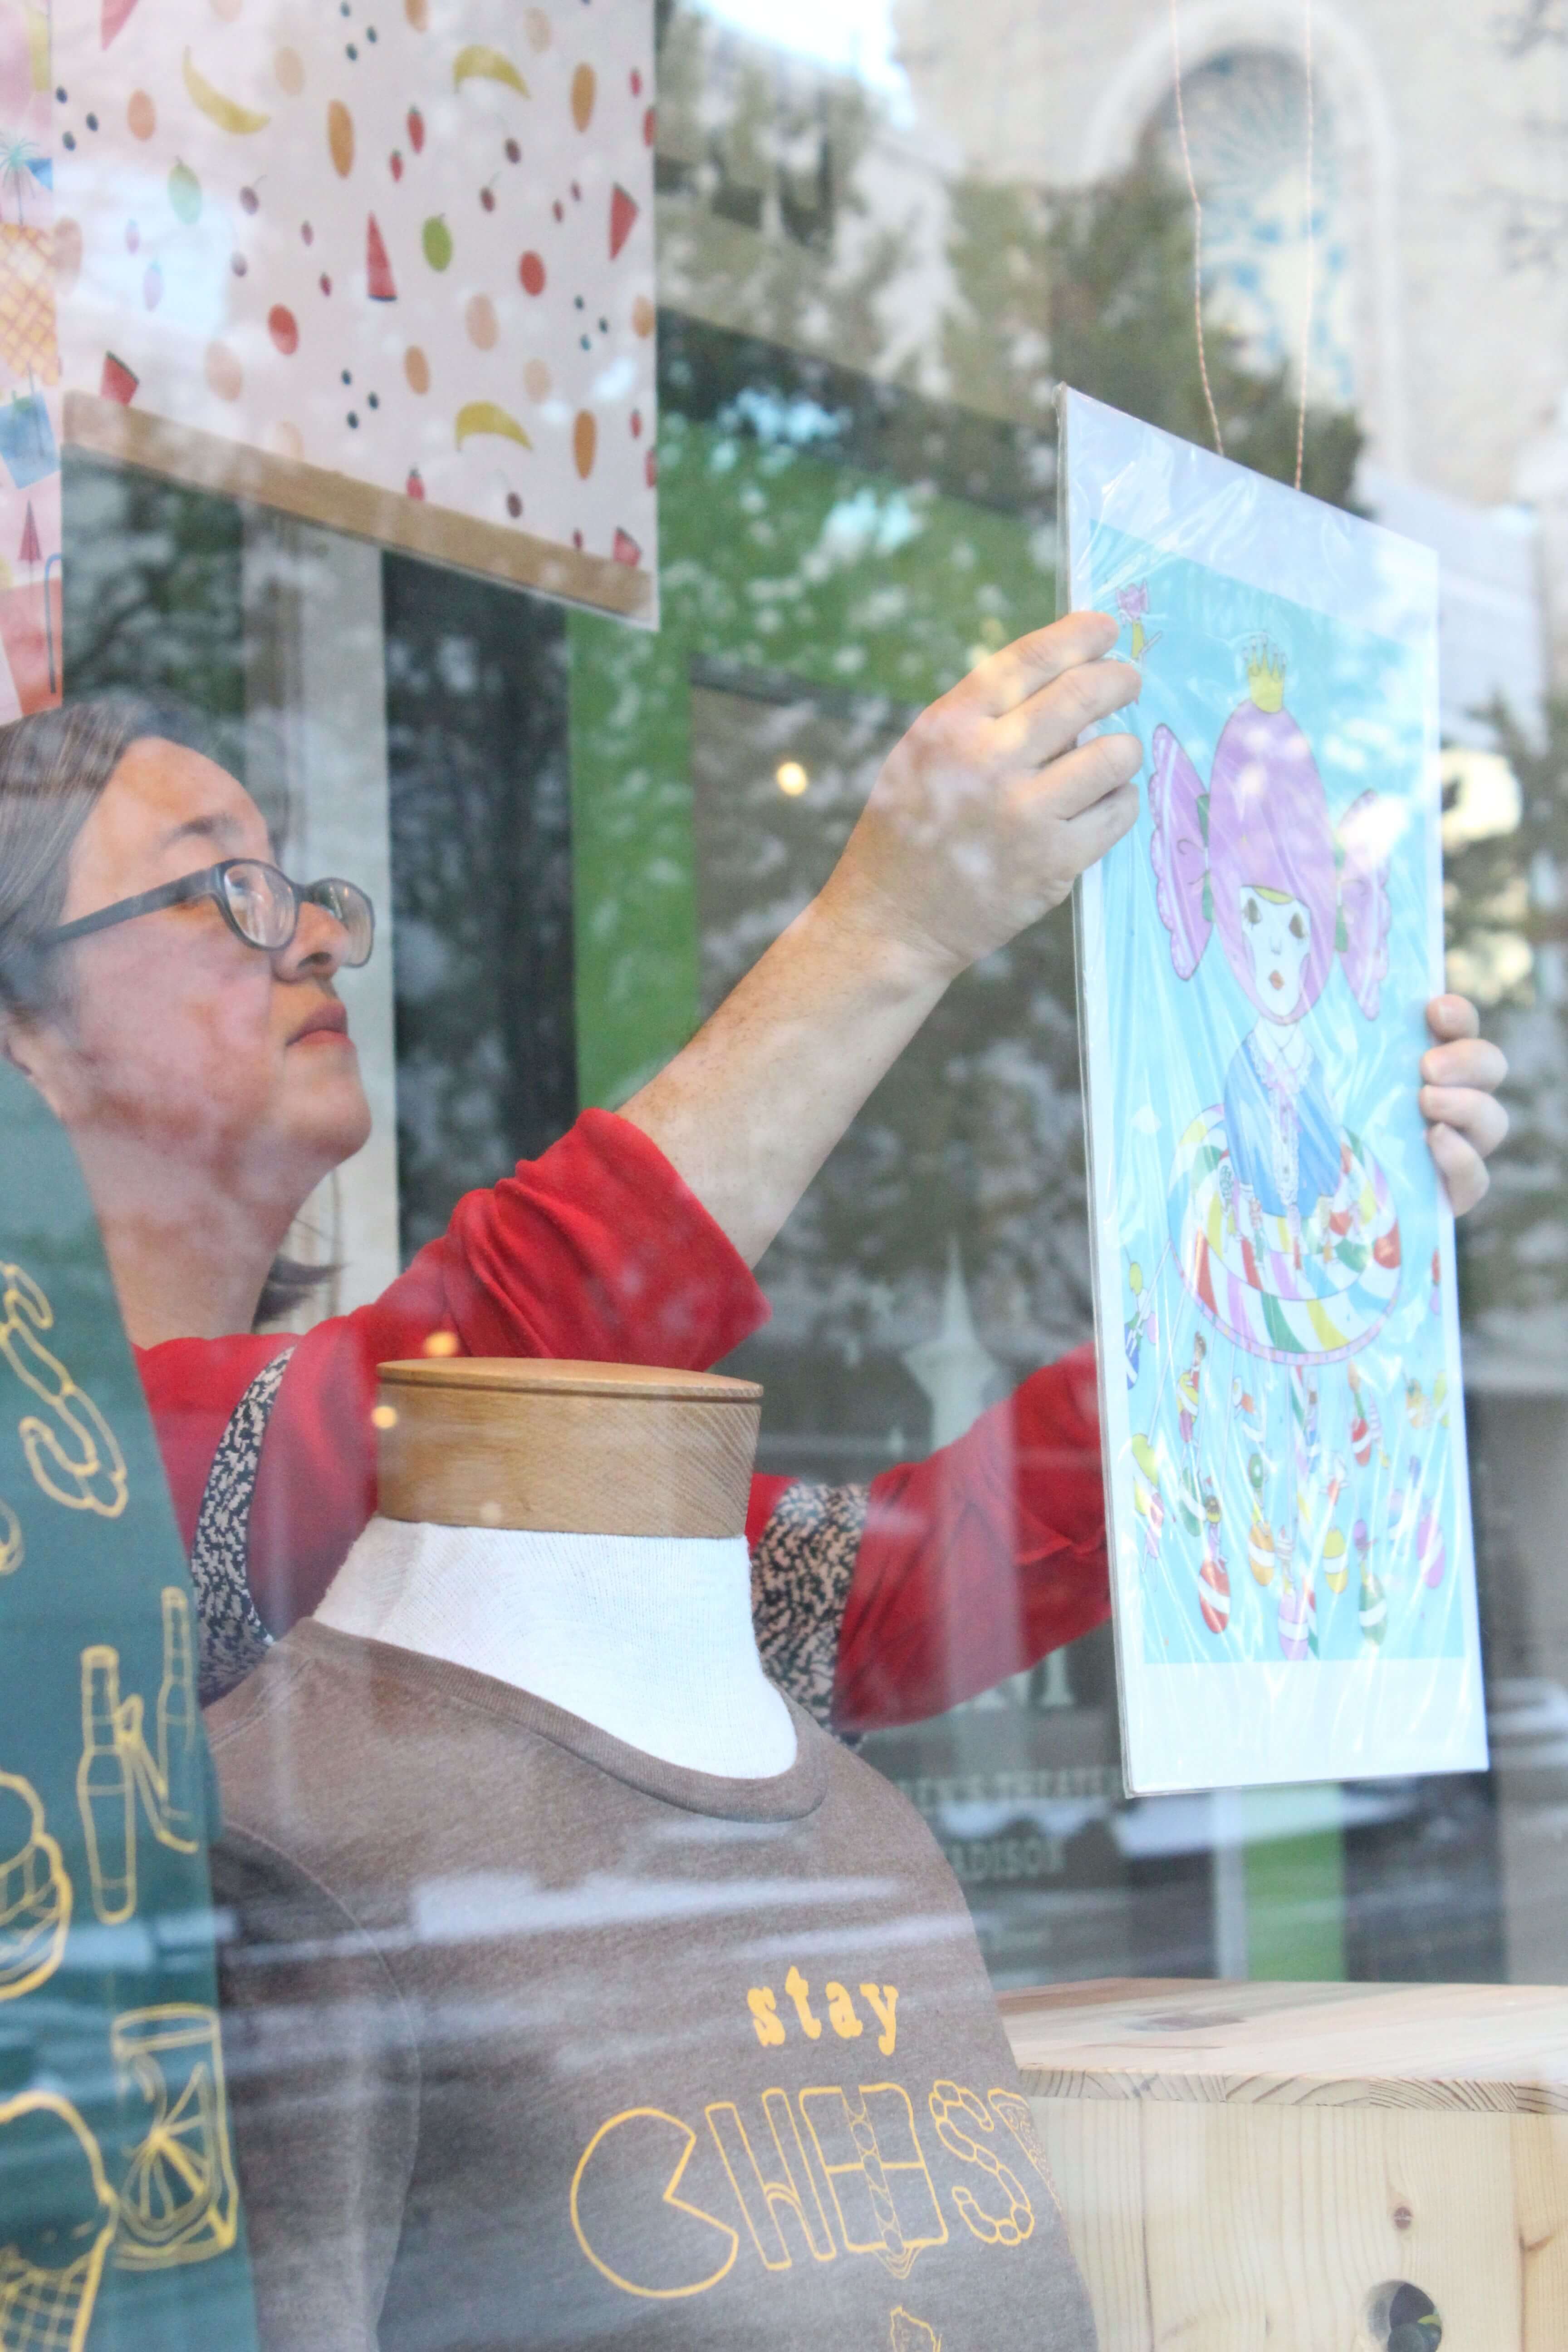 Laura Komai hangs artwork for display in Anthology's window.